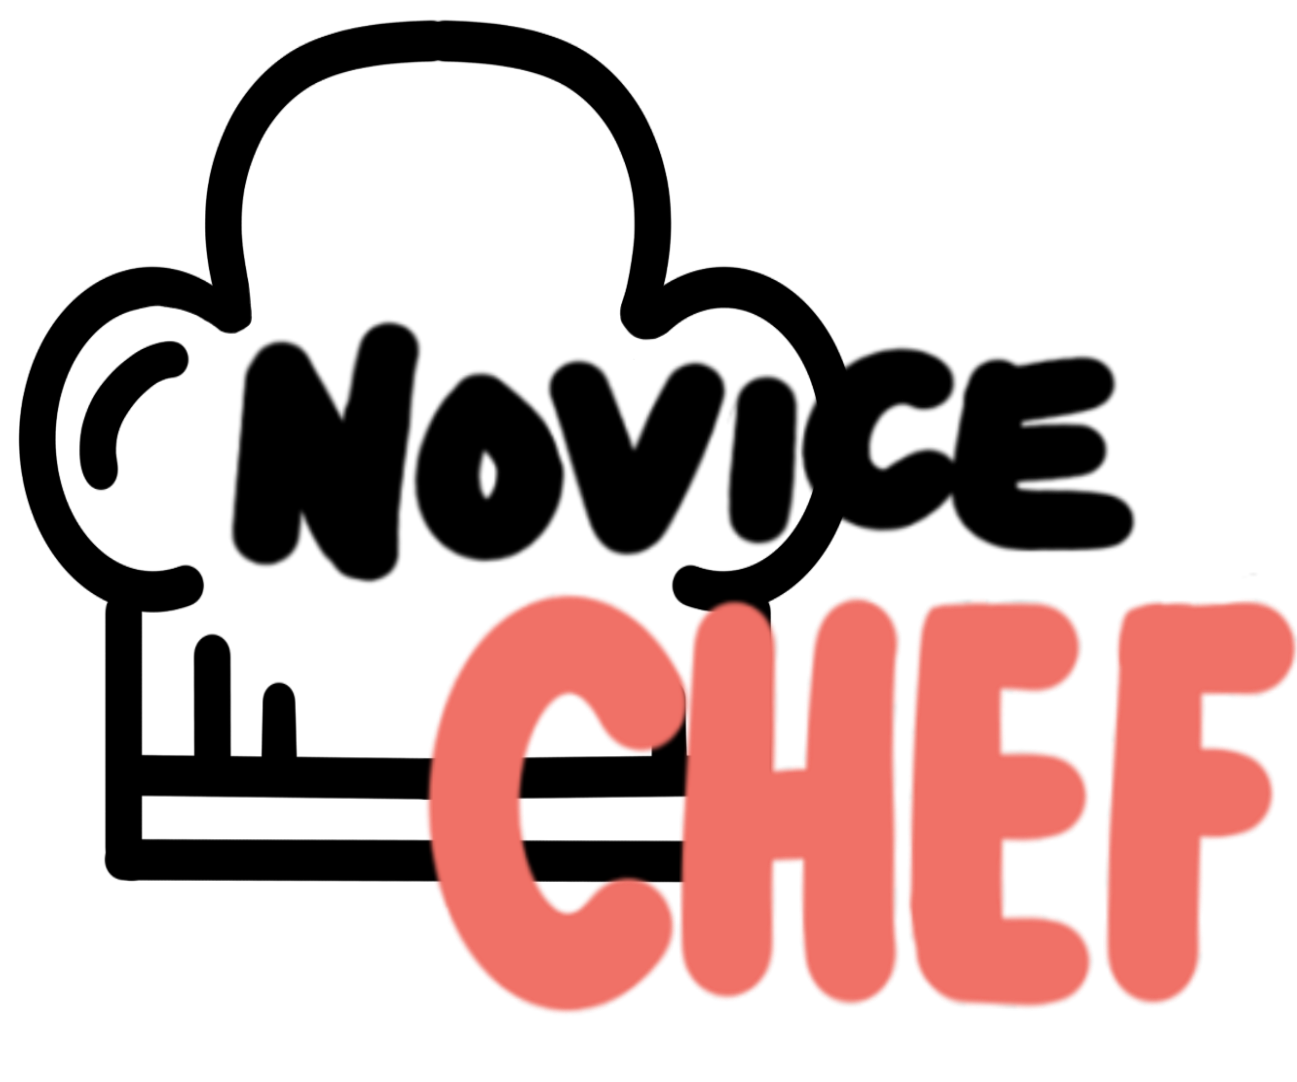 novice chef website logo